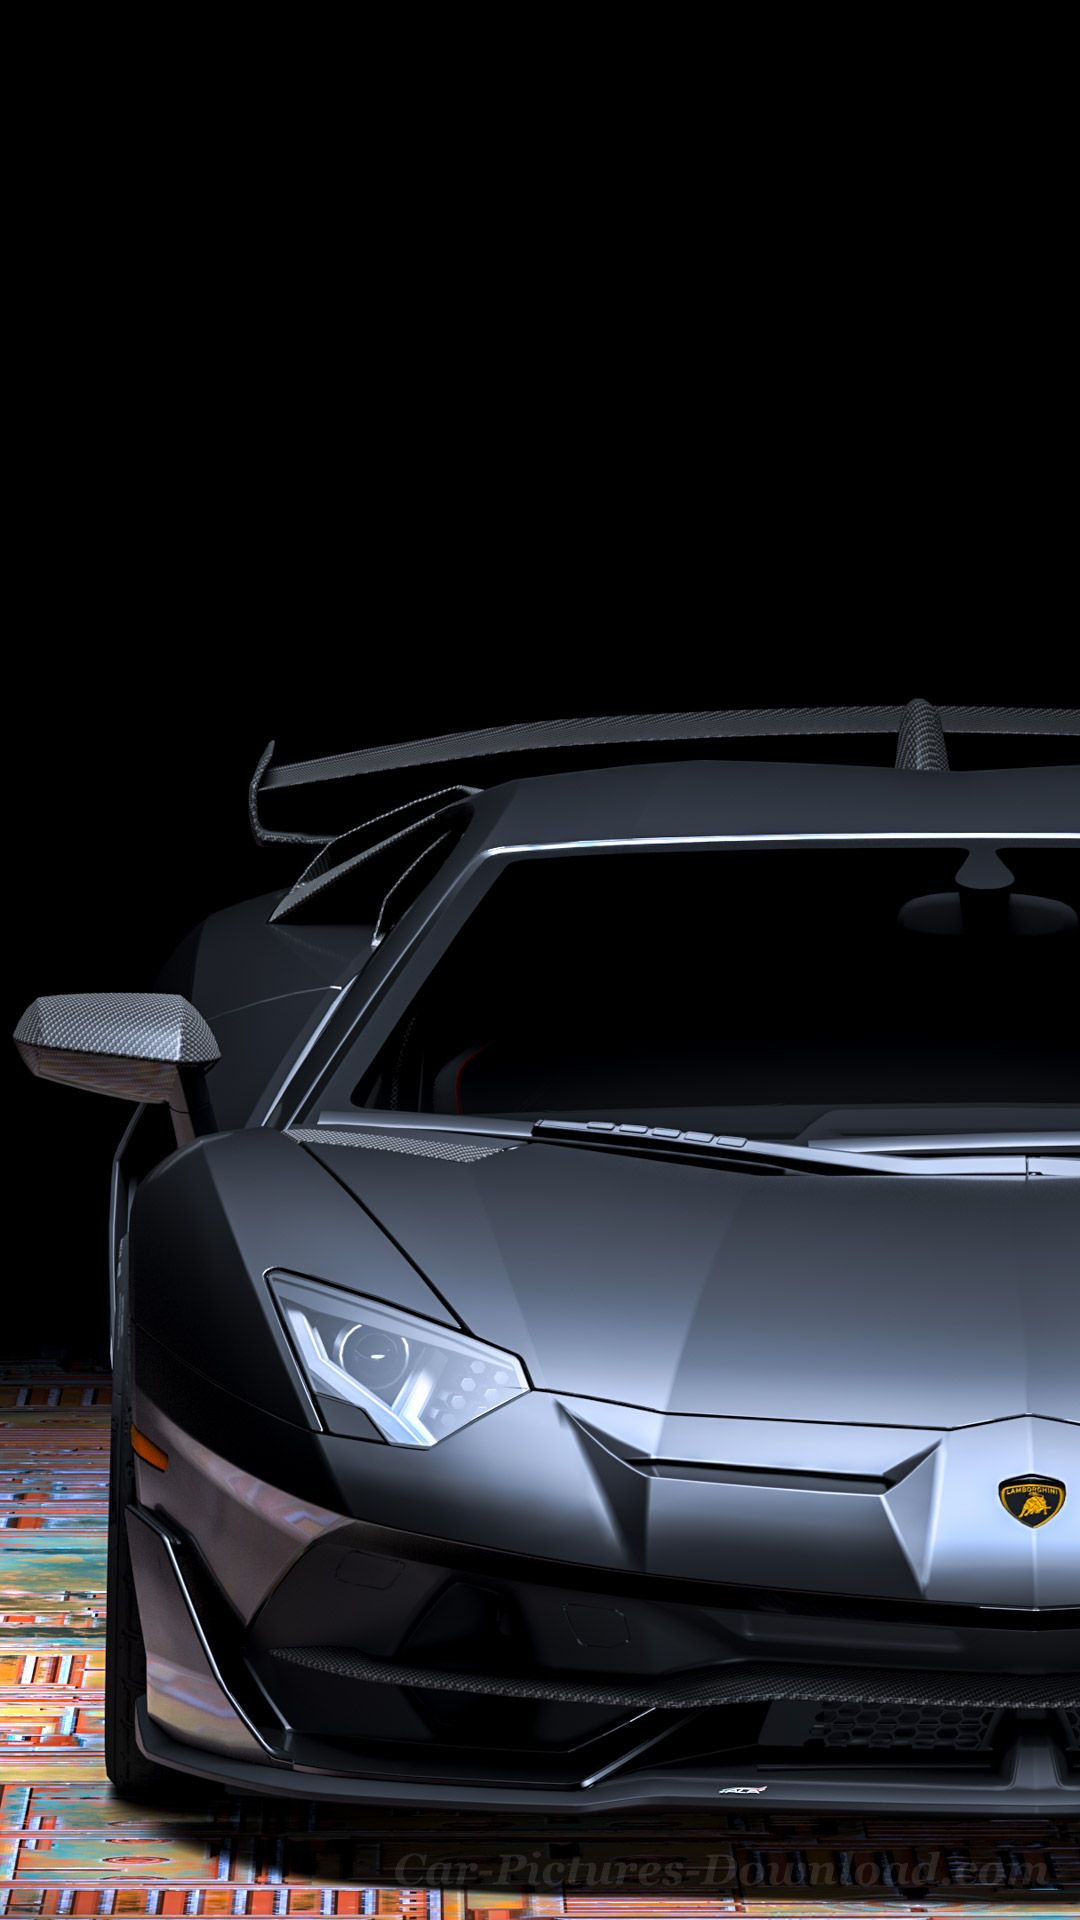 Lamborghini Aventador Wallpaper Image .car Picture Download.com